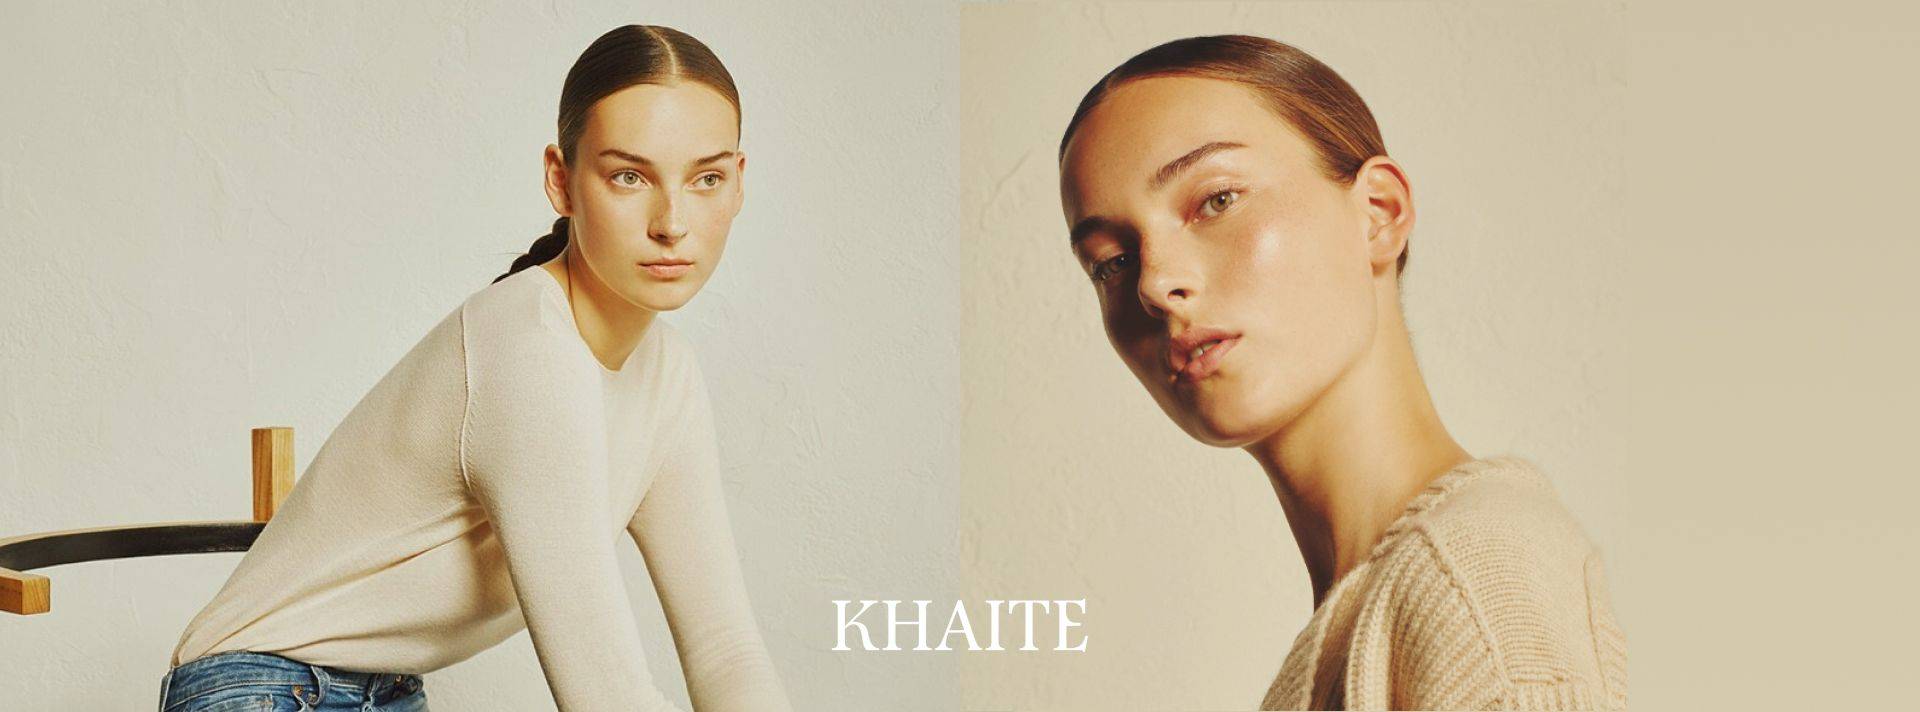 Khaite Branding | A Luxury Fashion Brand Hero